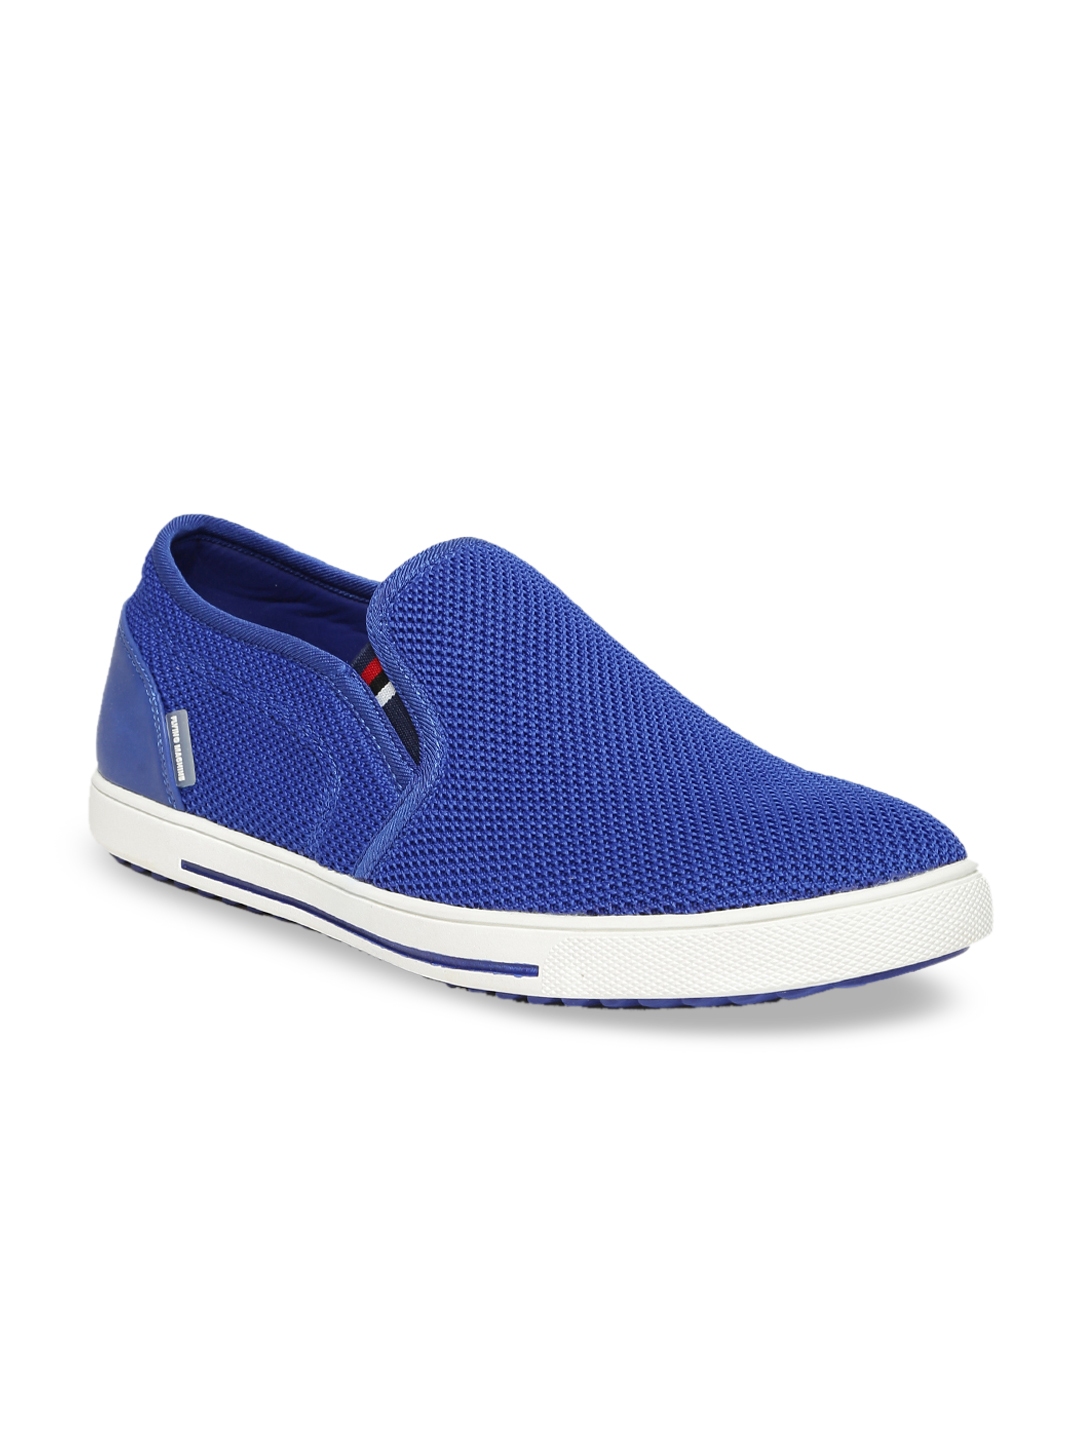 Buy Flying Machine Men Blue Slip On Sneakers - Casual Shoes for Men ...